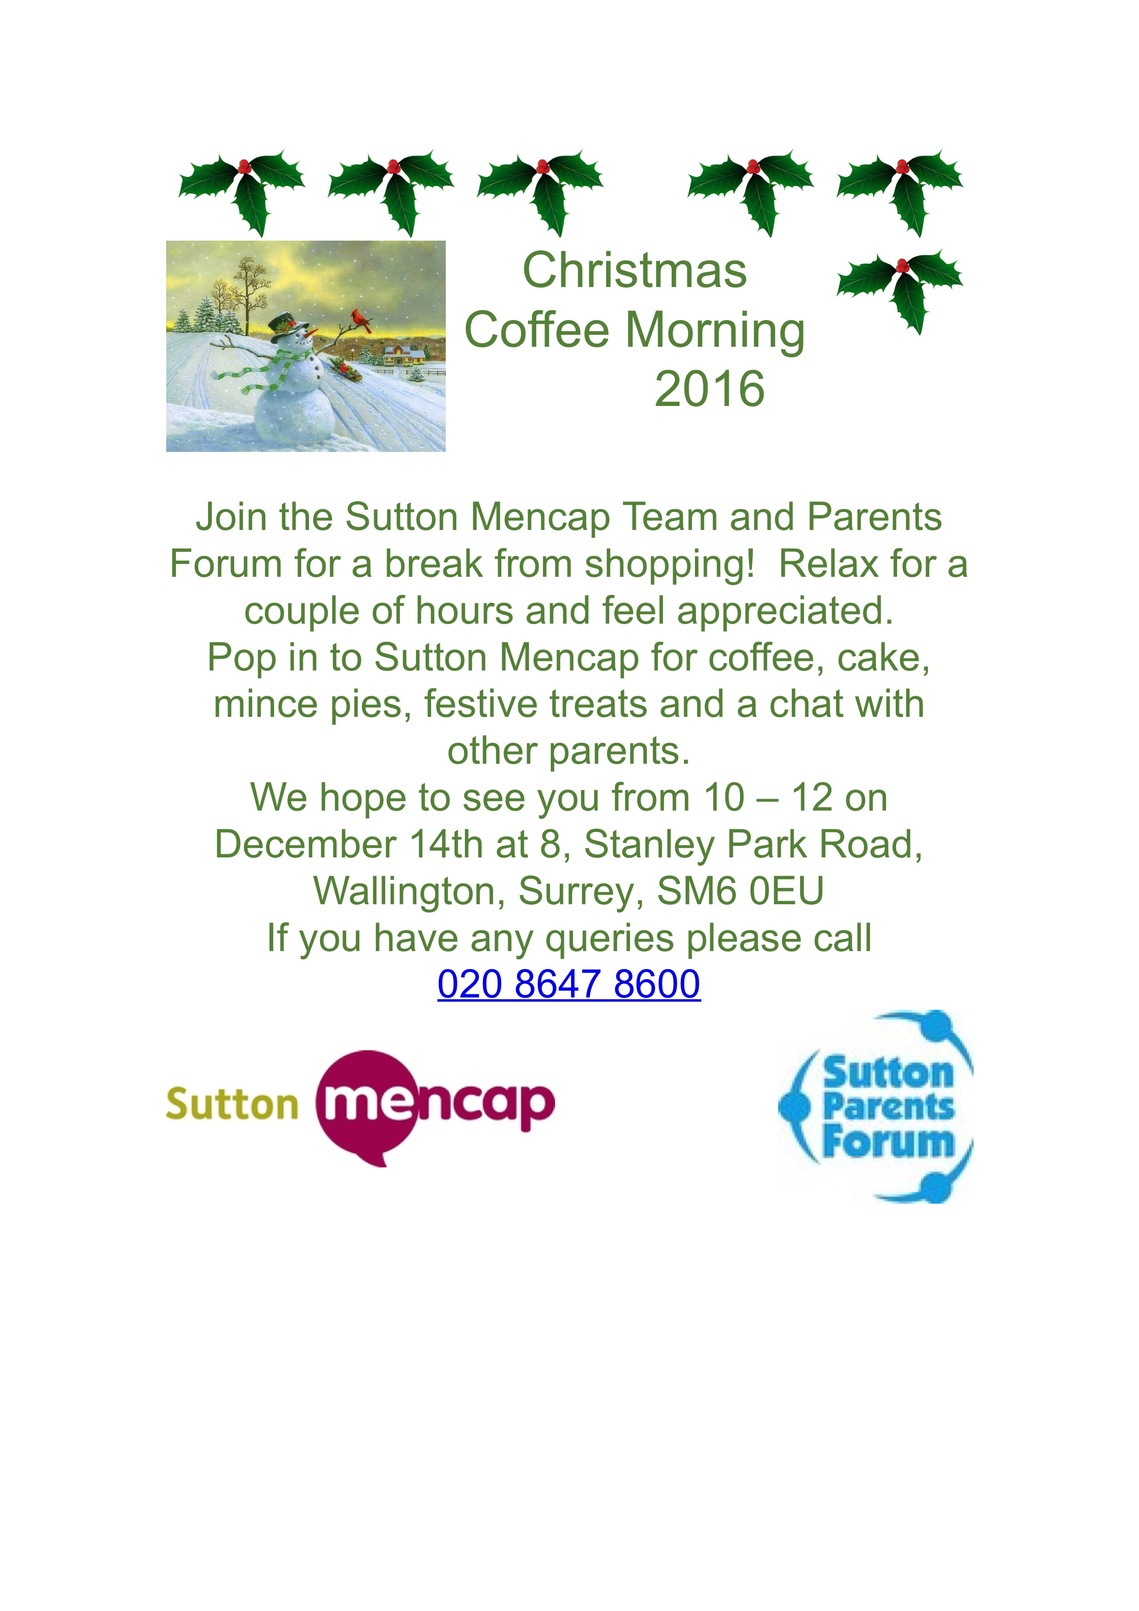 Sutton Mencap and Sutton Parents Forum Christmas coffee morning Poster